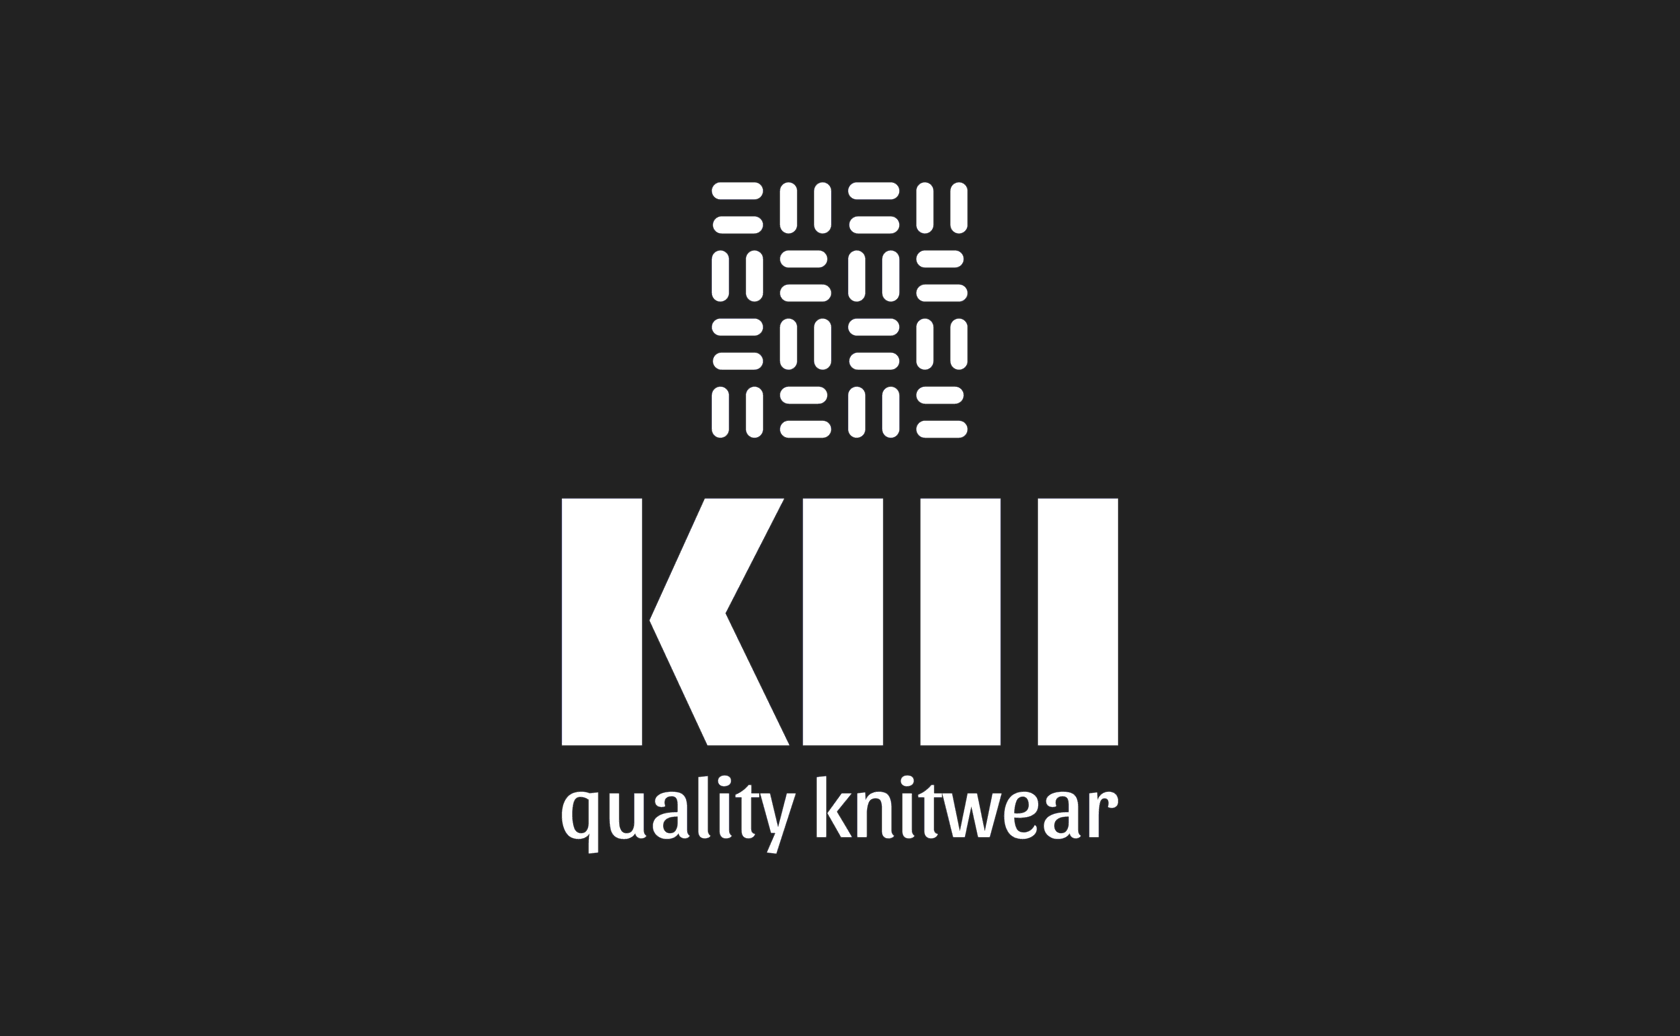 KIII quality knitwear